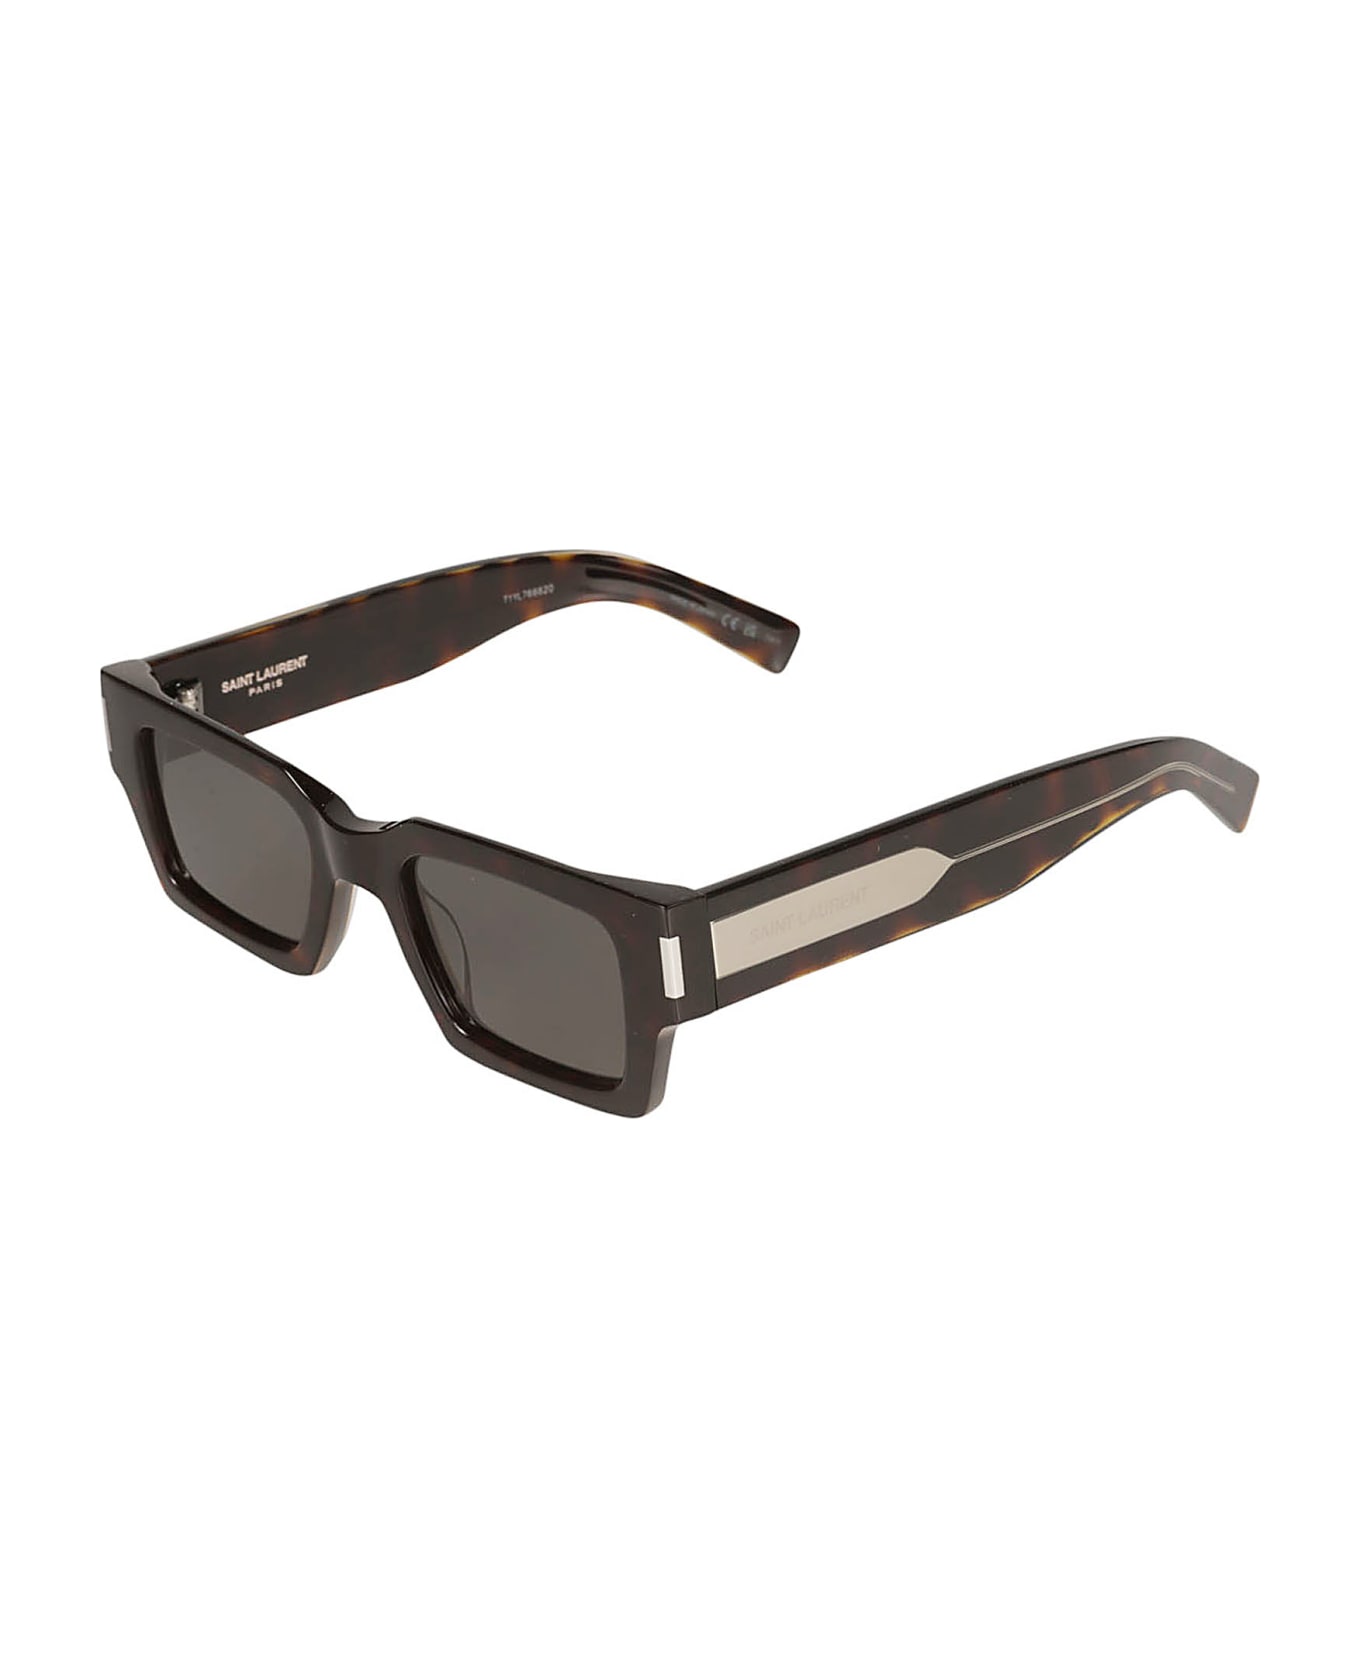 Saint Laurent Eyewear Rectangular Frame Flame Effect Lav Sunglasses - Havana/Crystal/Grey